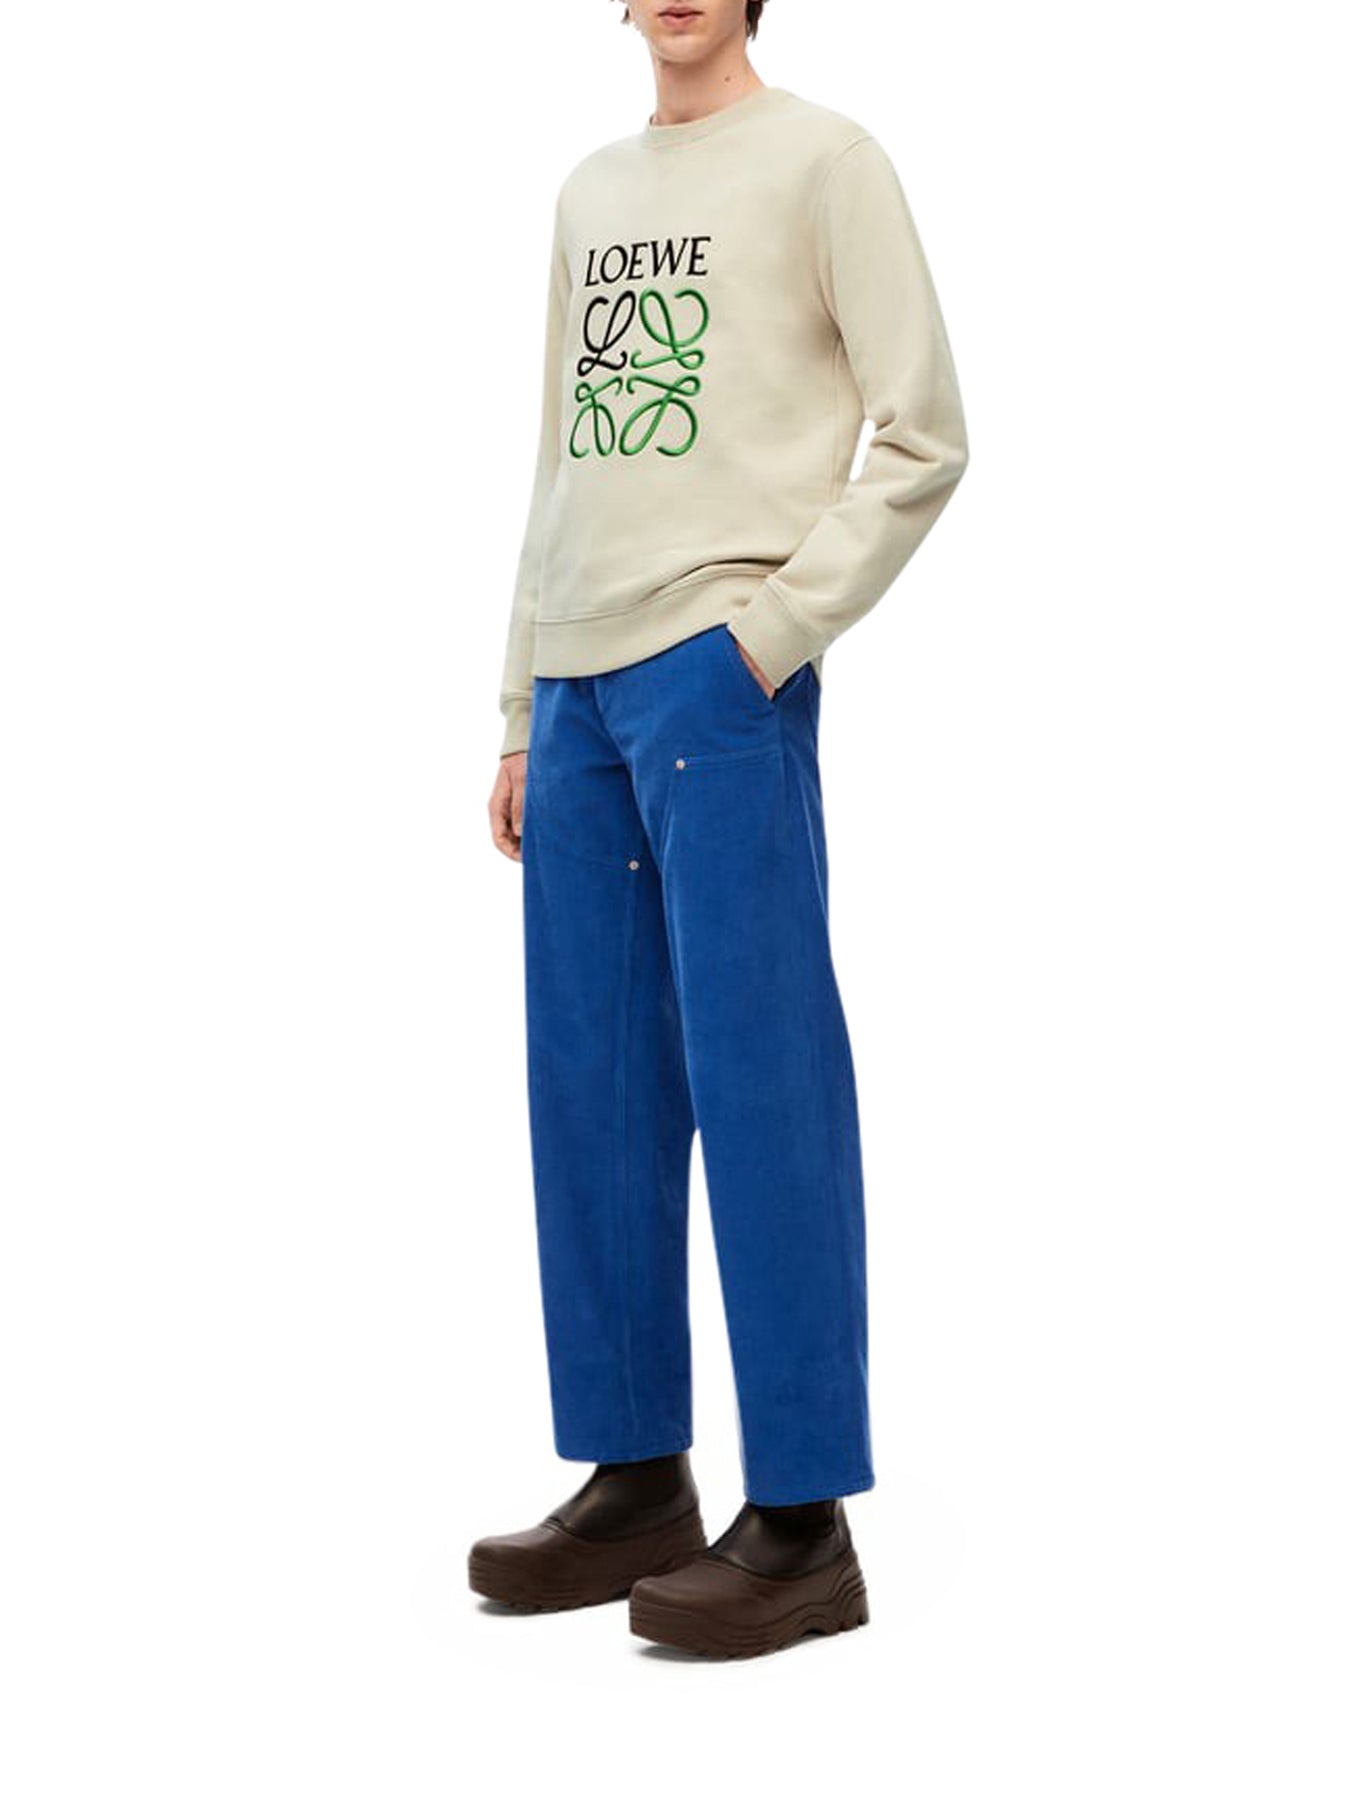 LOEWE Anagram regular fit sweatshirt in cotton